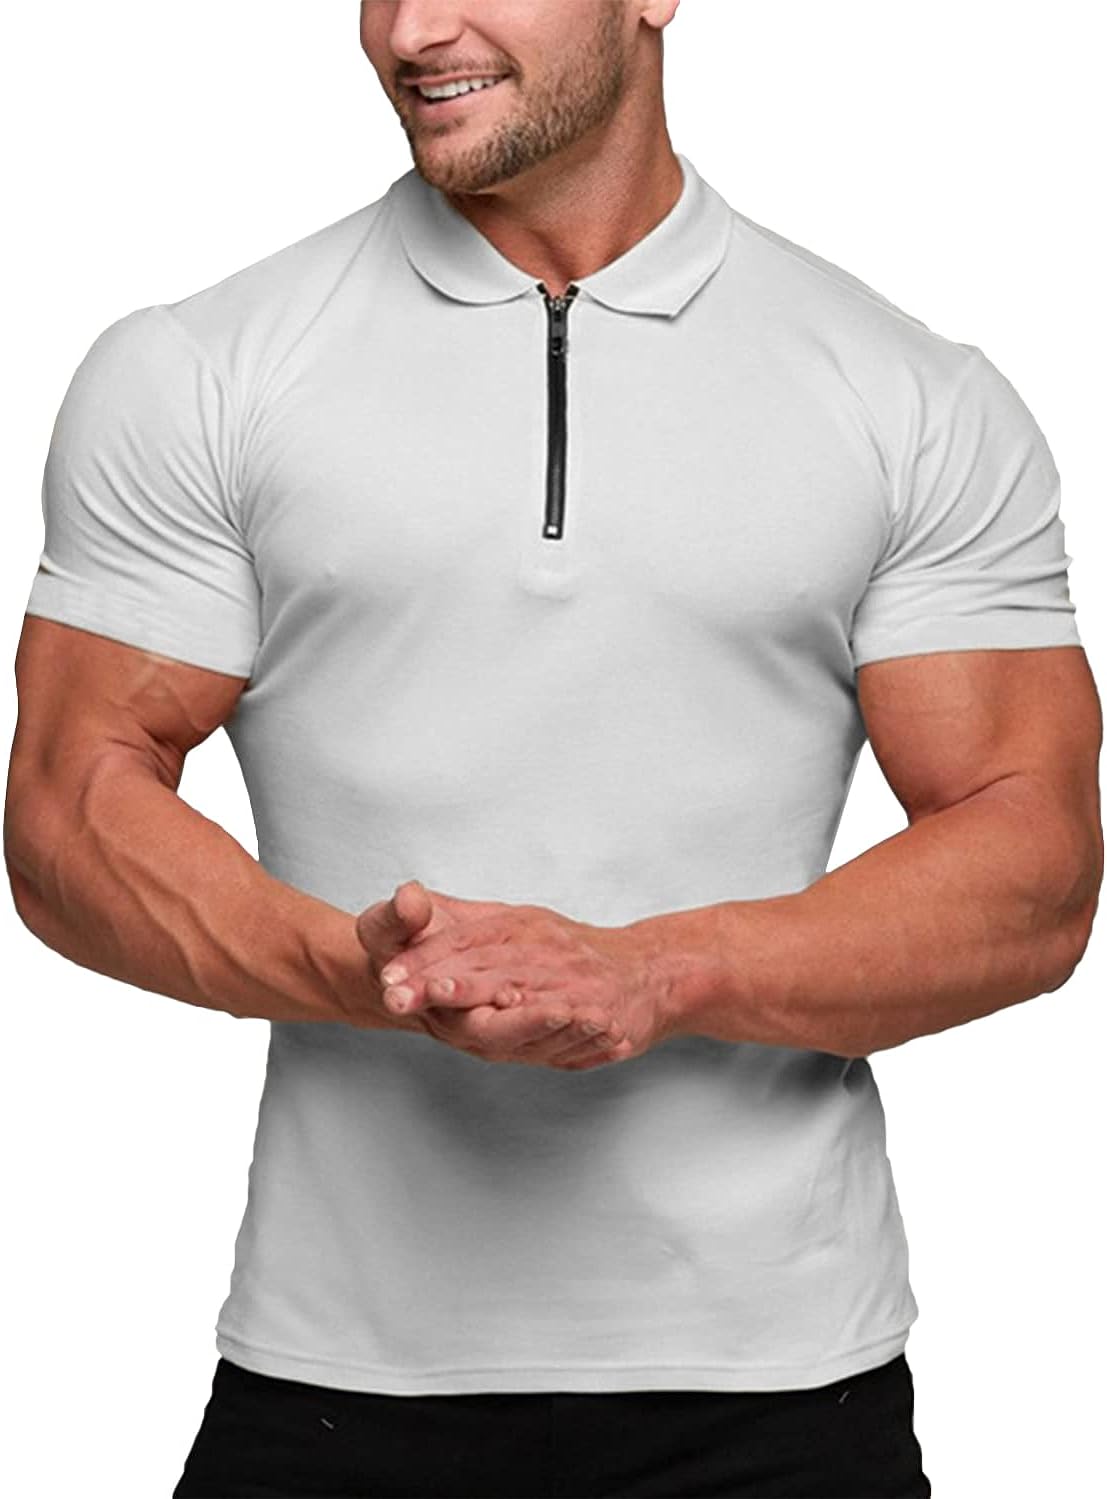 Zipper Polo Fashion Mens T Shirt Muscle Shirts Workout Slim Fit Sports Tee Tops 